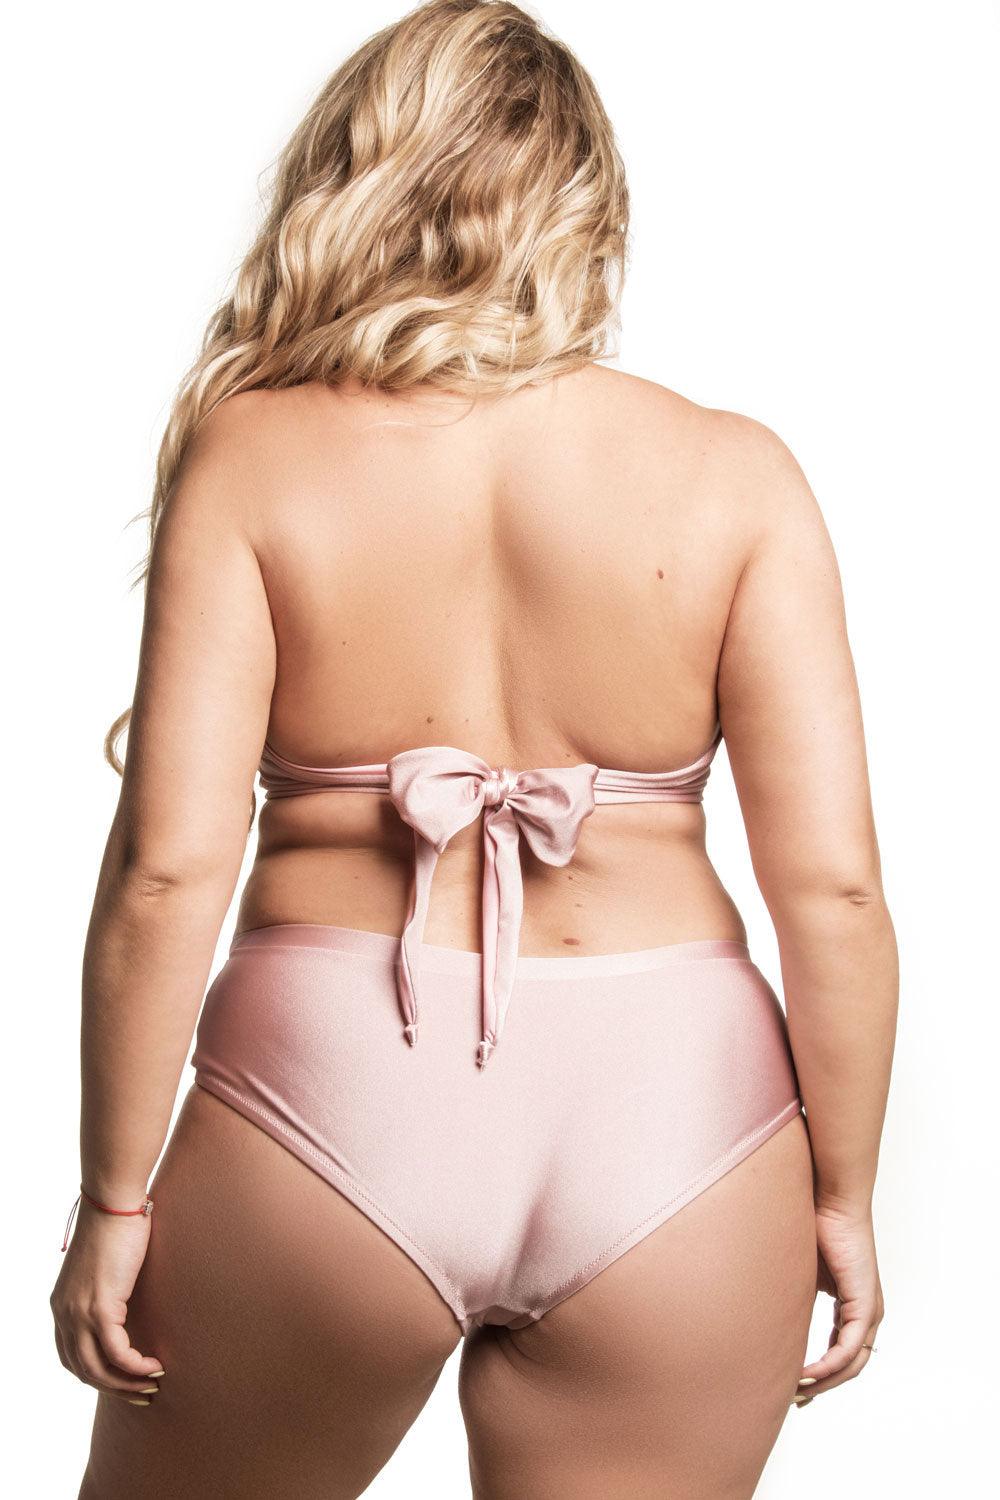 Stella bikini shorts plus size - Bikini bottom by Love Jilty. Shop on yesUndress